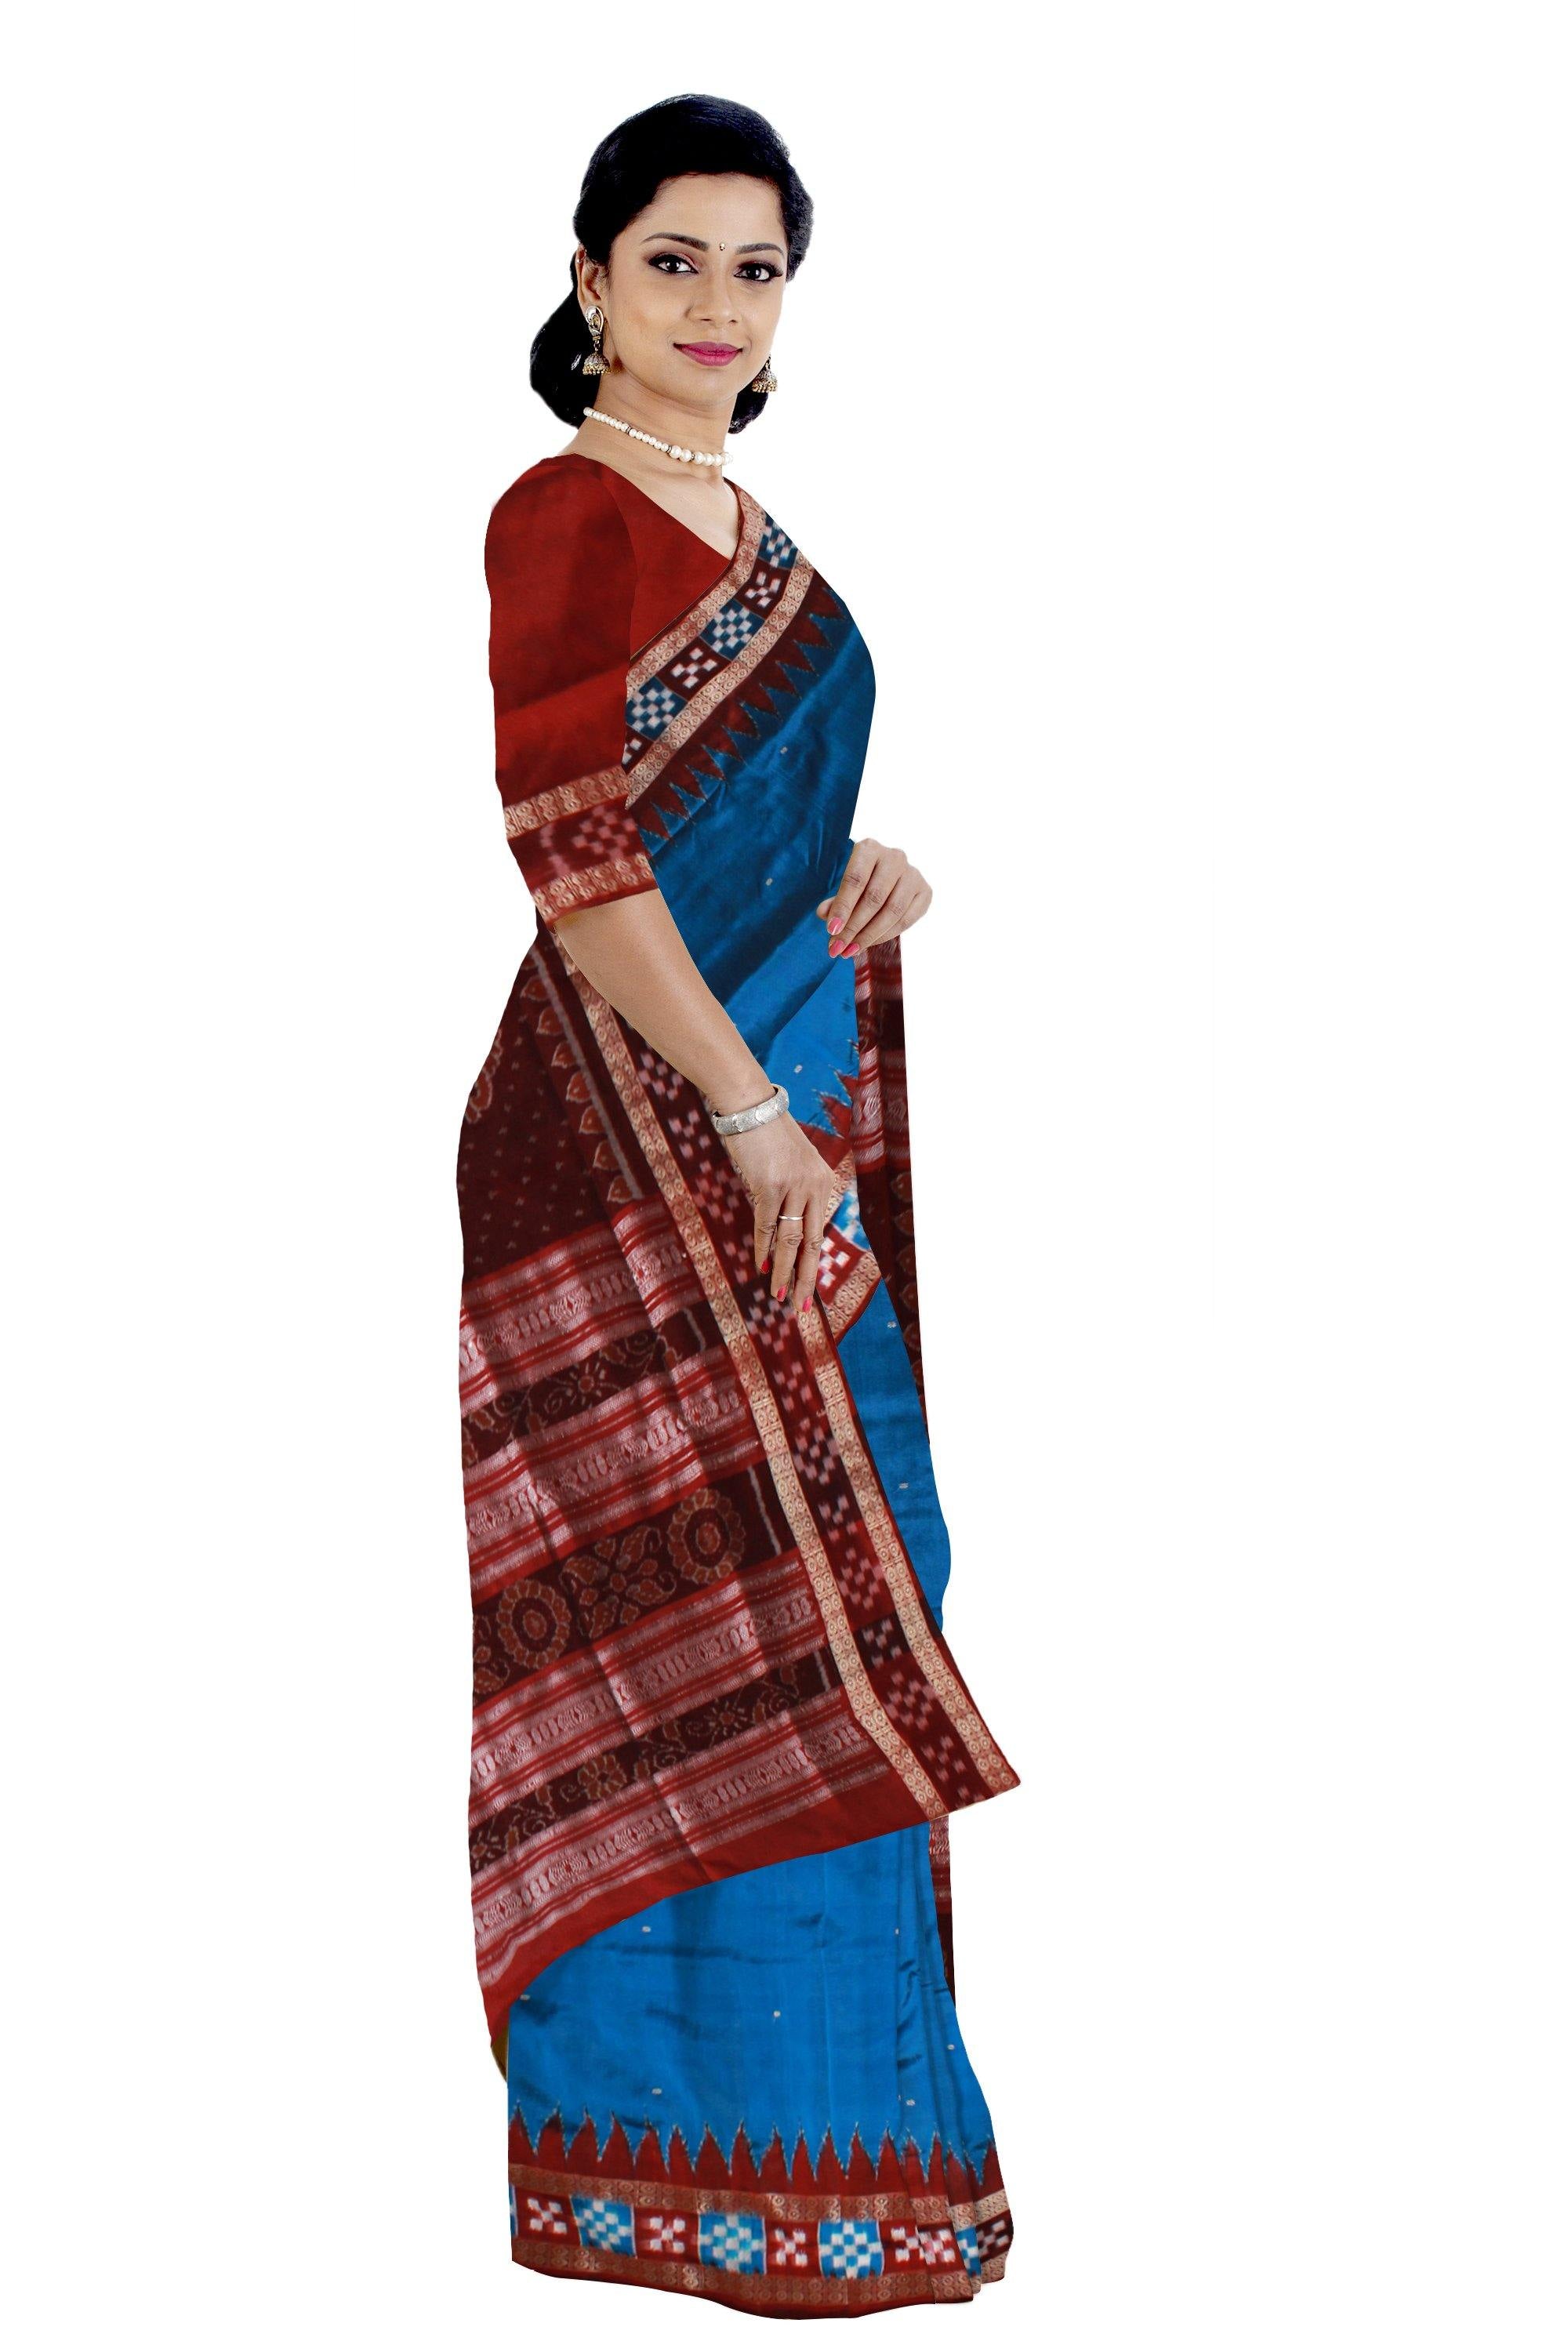 Pasapali border pata in bule color with blouse piece. - Koshali Arts & Crafts Enterprise